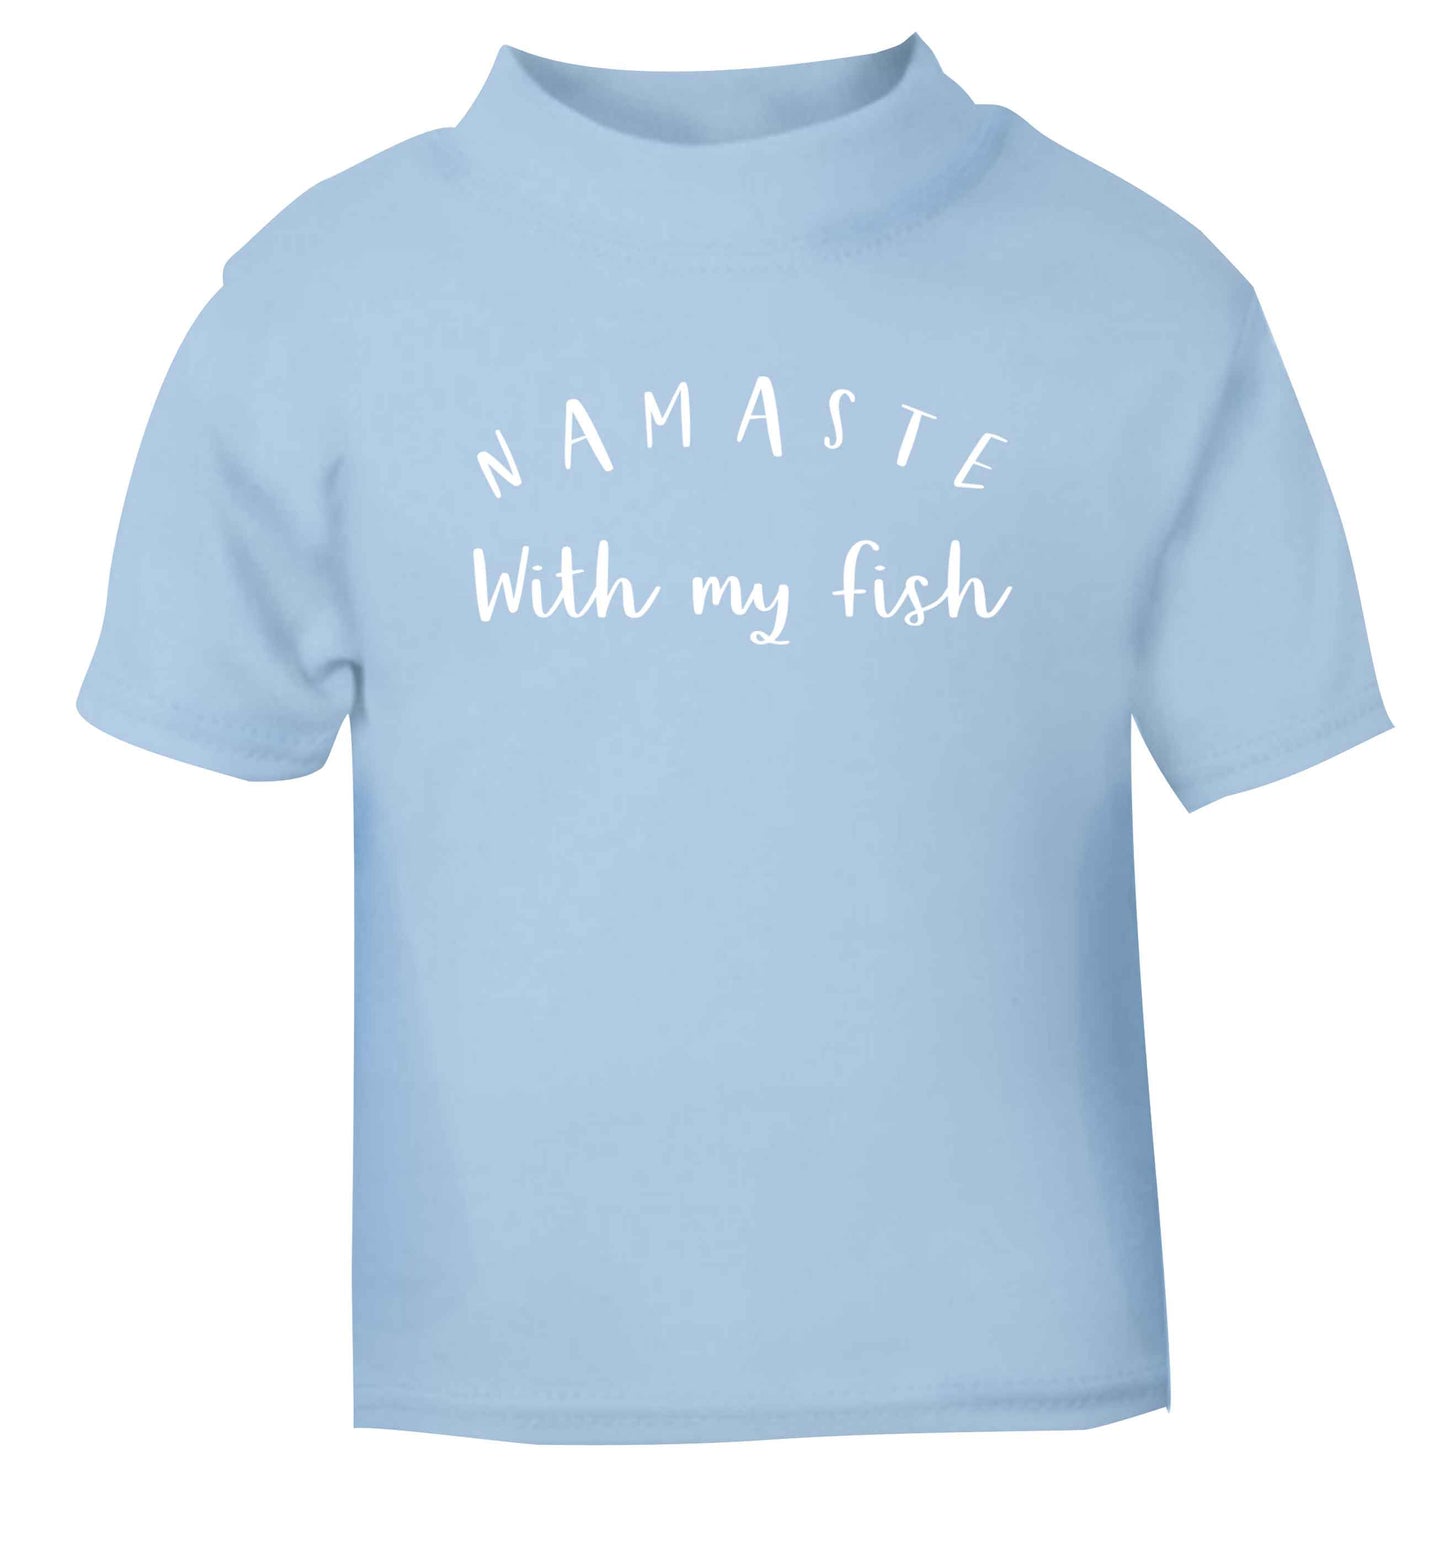 Namaste with my fish light blue Baby Toddler Tshirt 2 Years